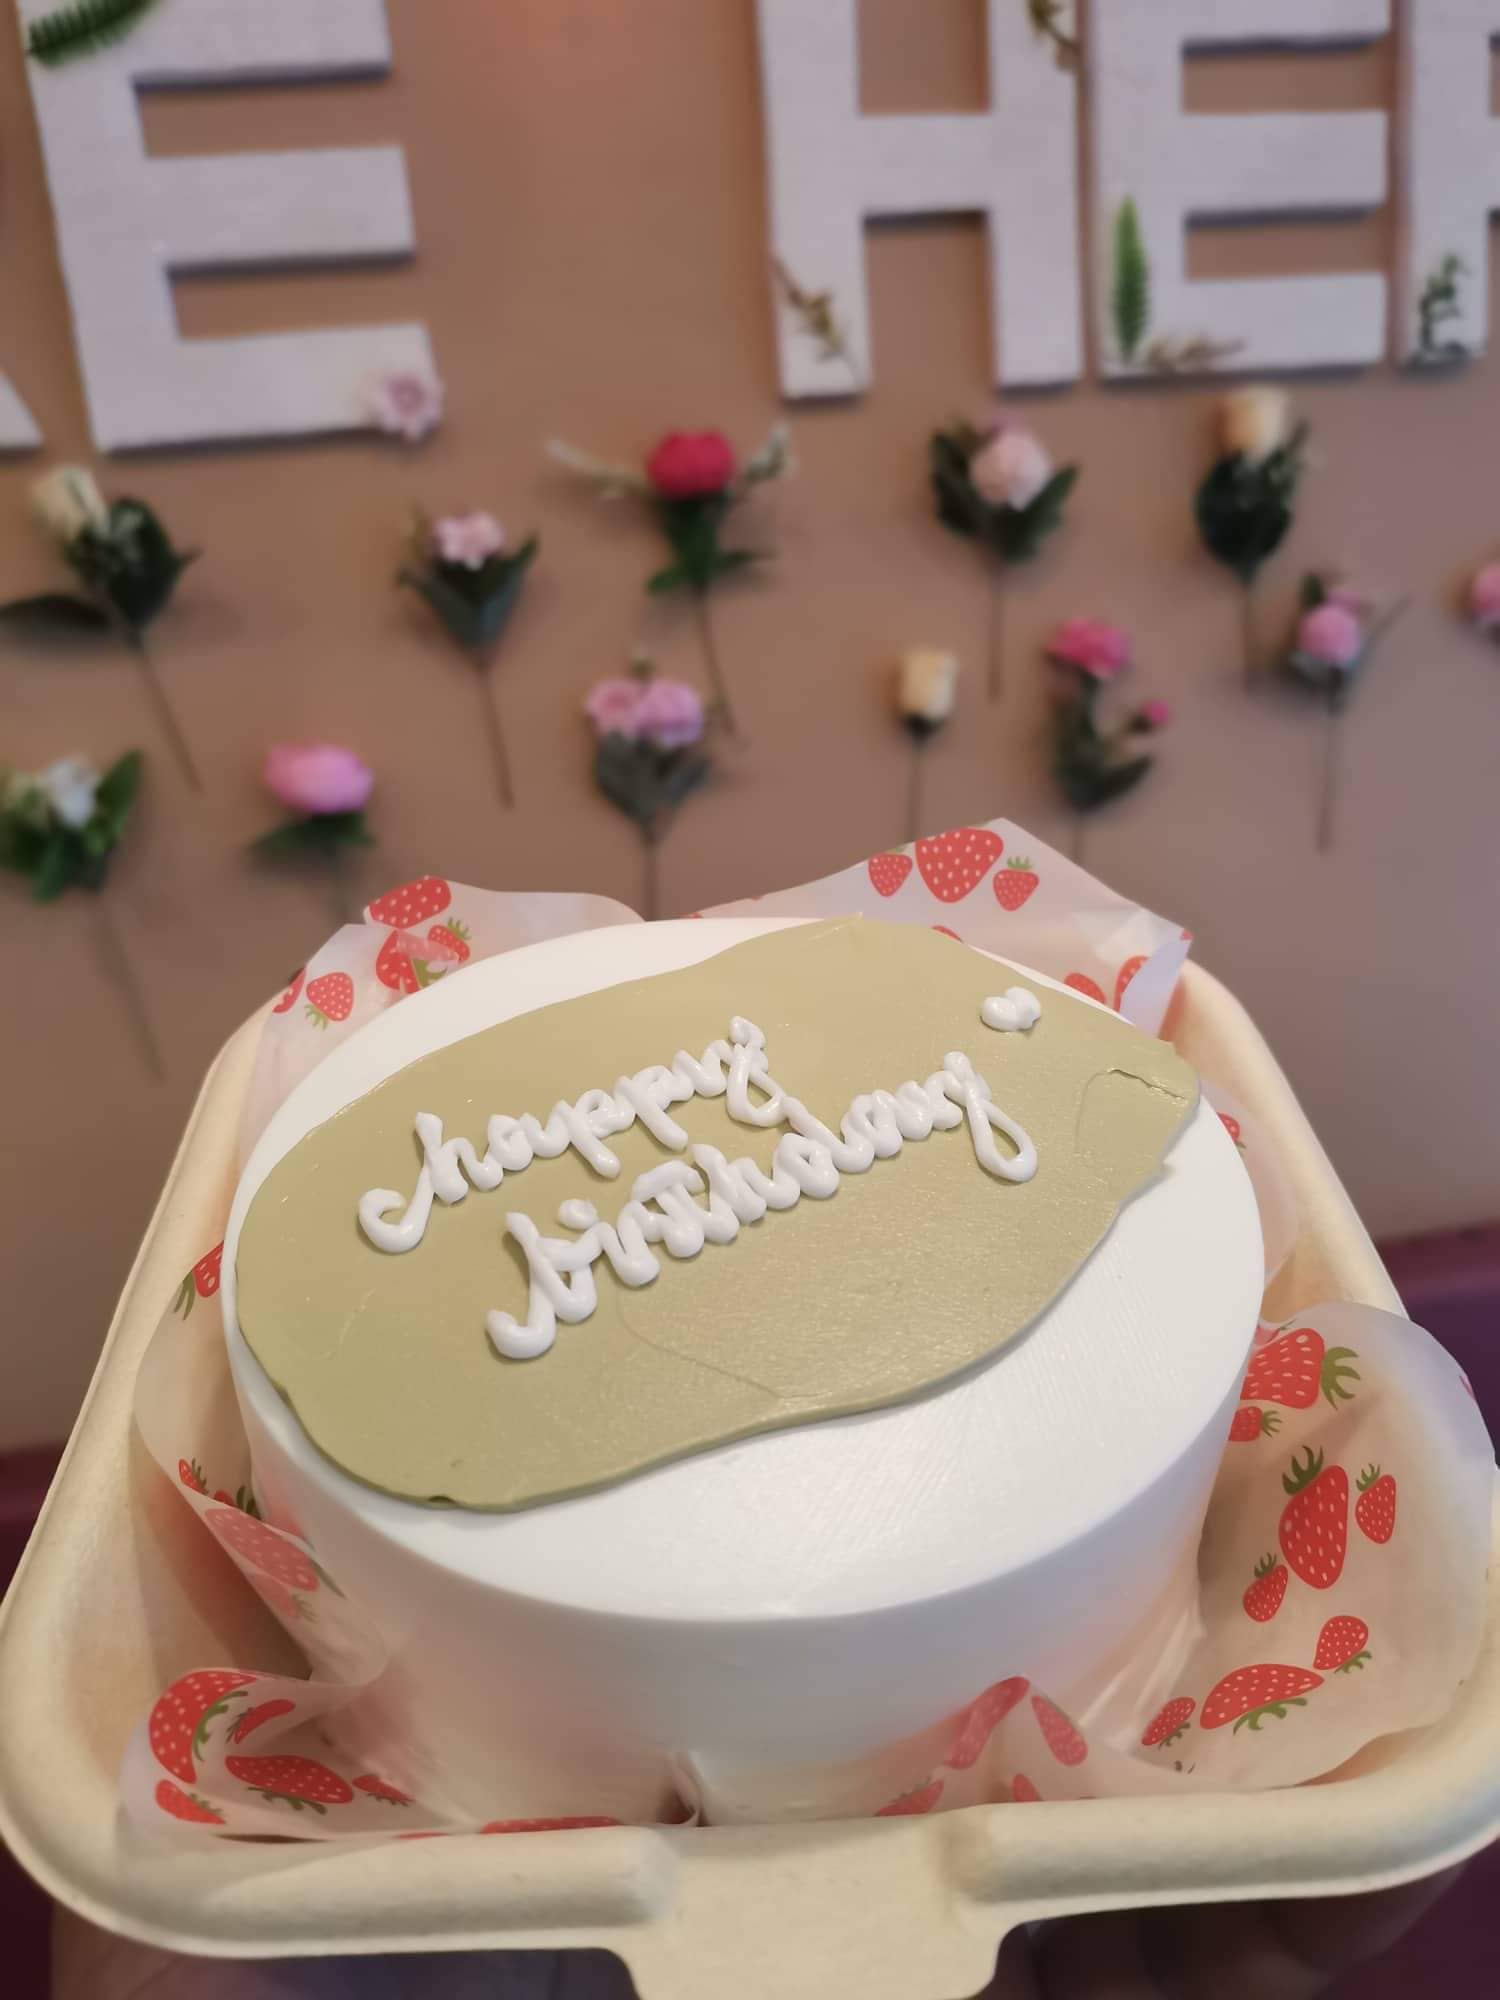 Custom Cake 4x2 Inches Happy Birthday Pipie Co Bread Cake Pastries Iligan 